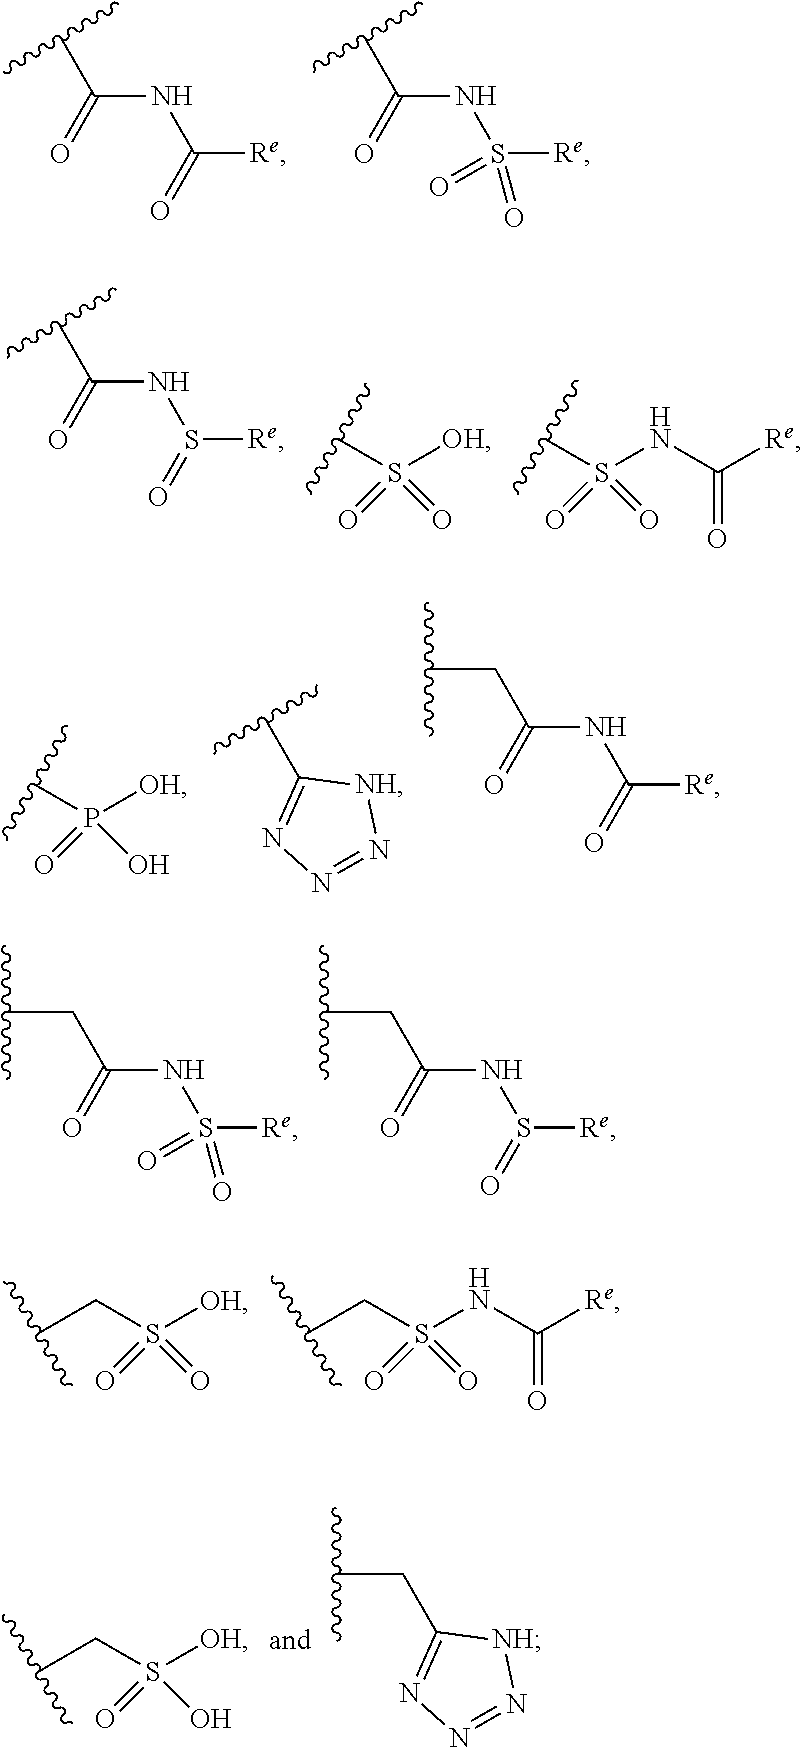 Cyclohexyl acid triazole azines as lpa antagonists